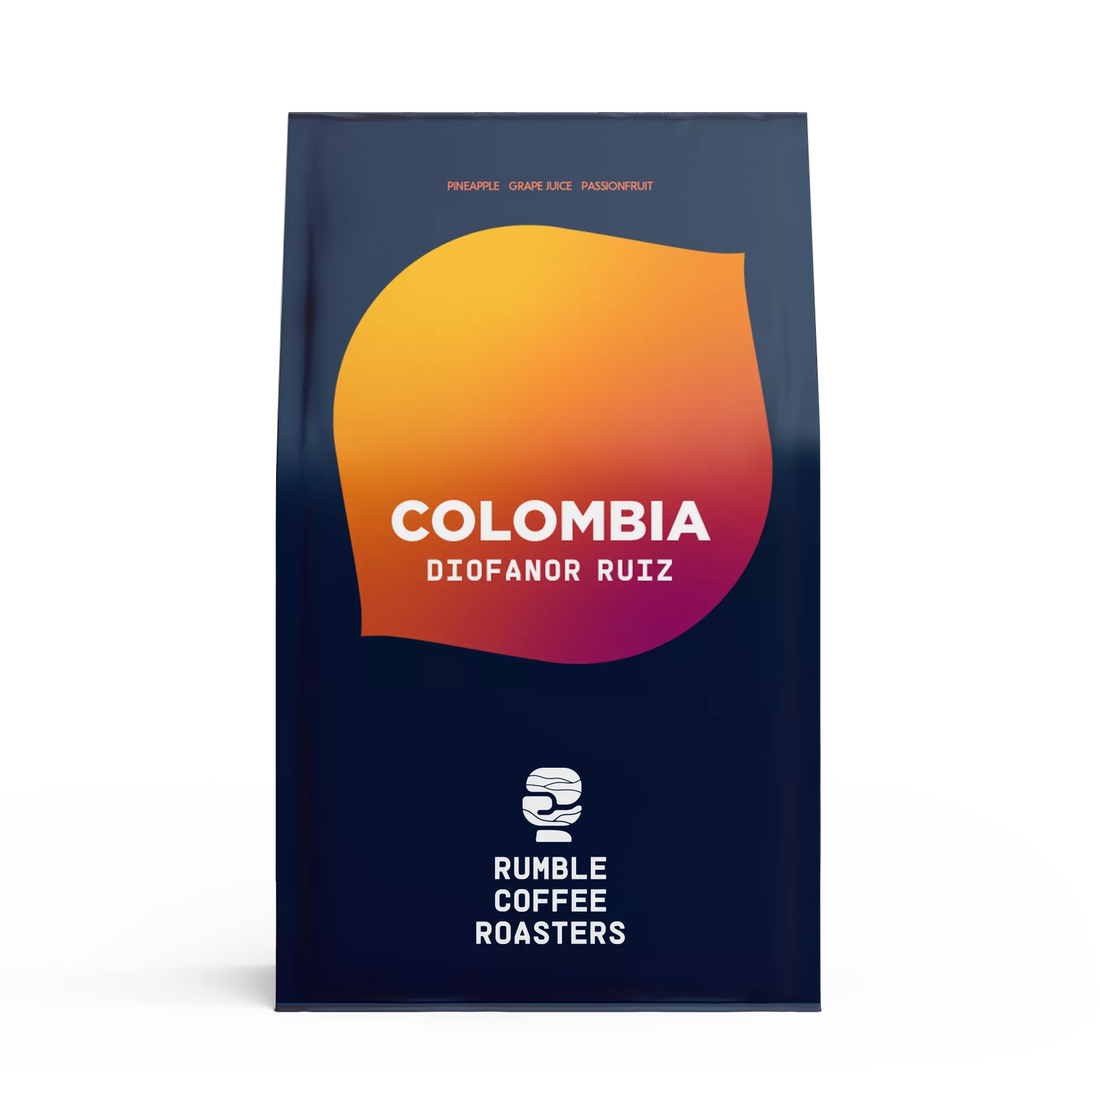 Colombia Diafanor Ruiz Filter - Rumble Coffee